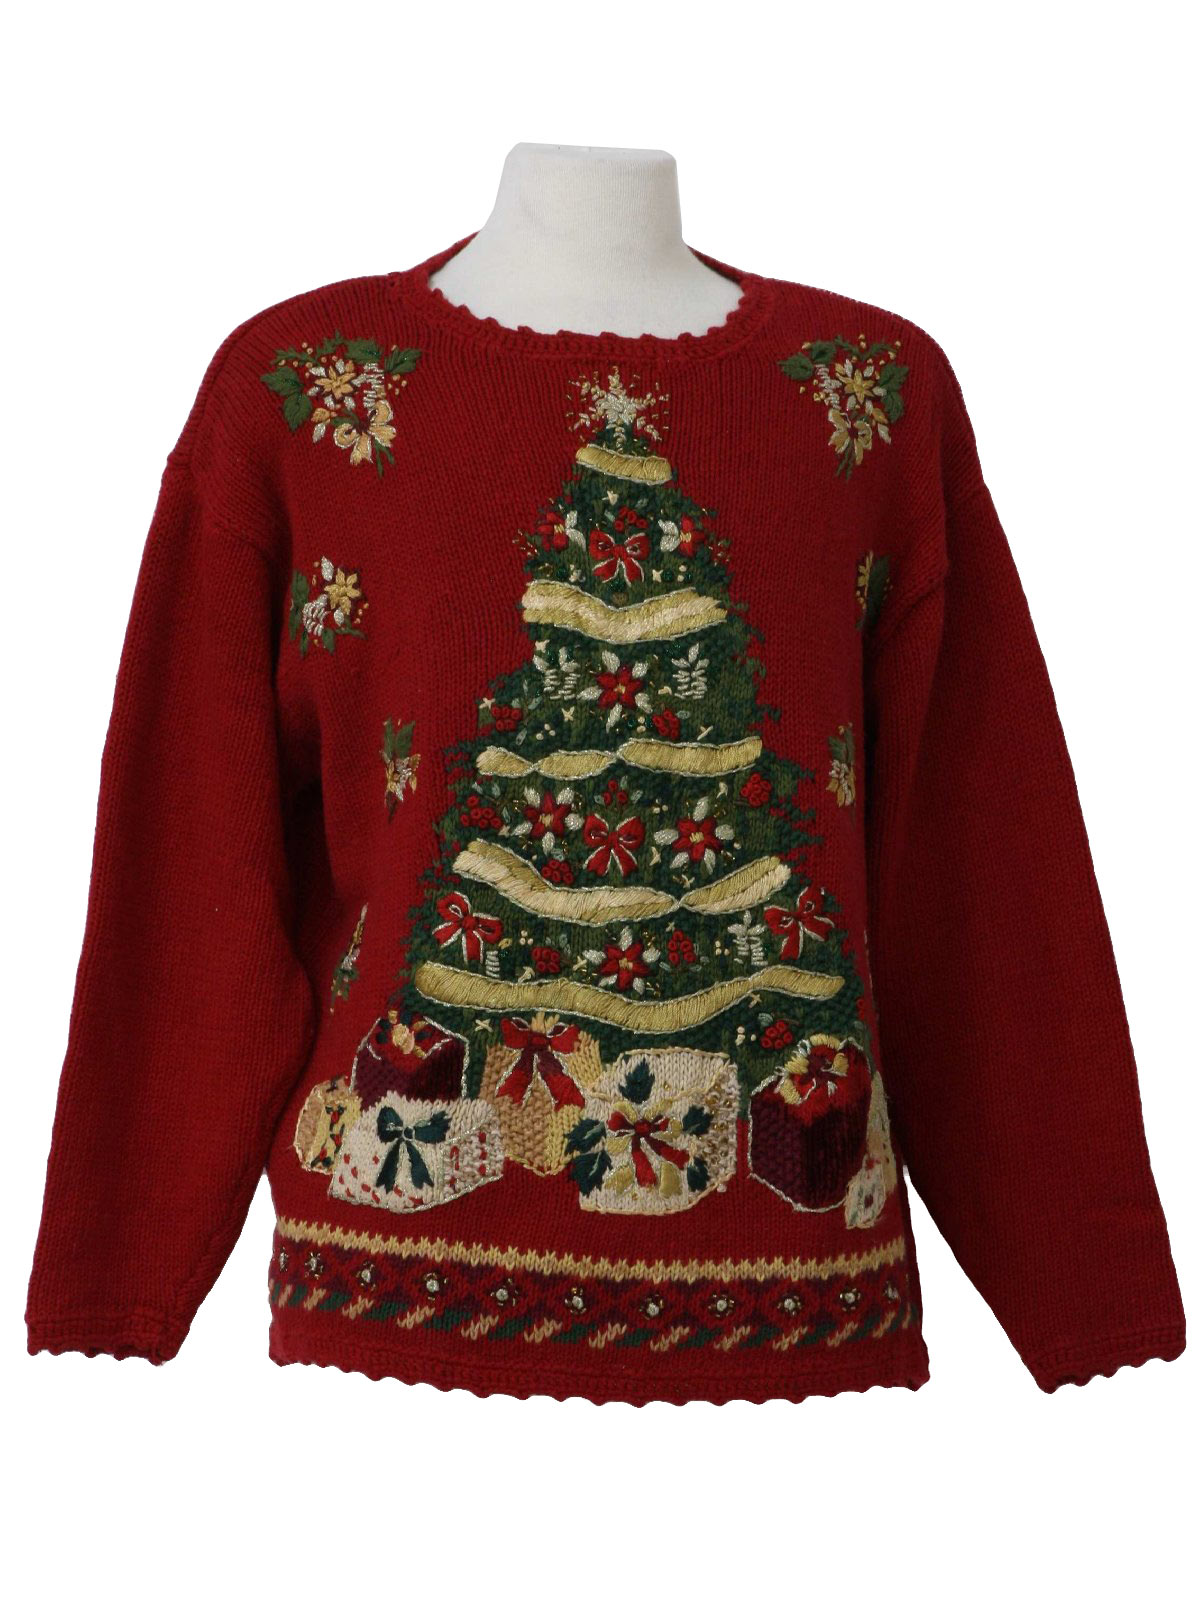 Womens Ugly Christmas Sweater: -Tiara International- Womens red ...